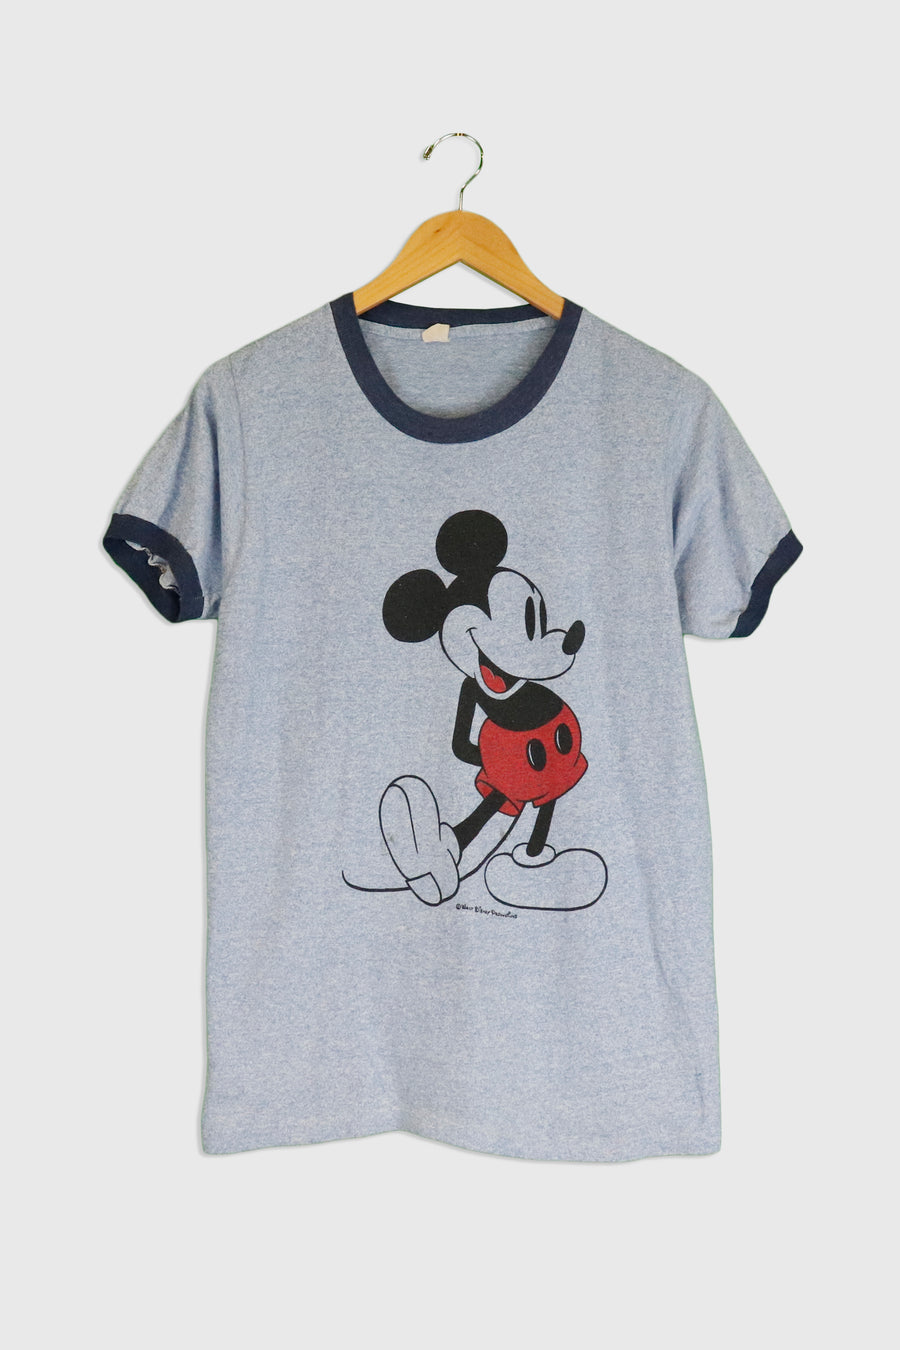 Vintage Disney Mikey Mouse Hollow Vinyl Print T Shirt Sz S